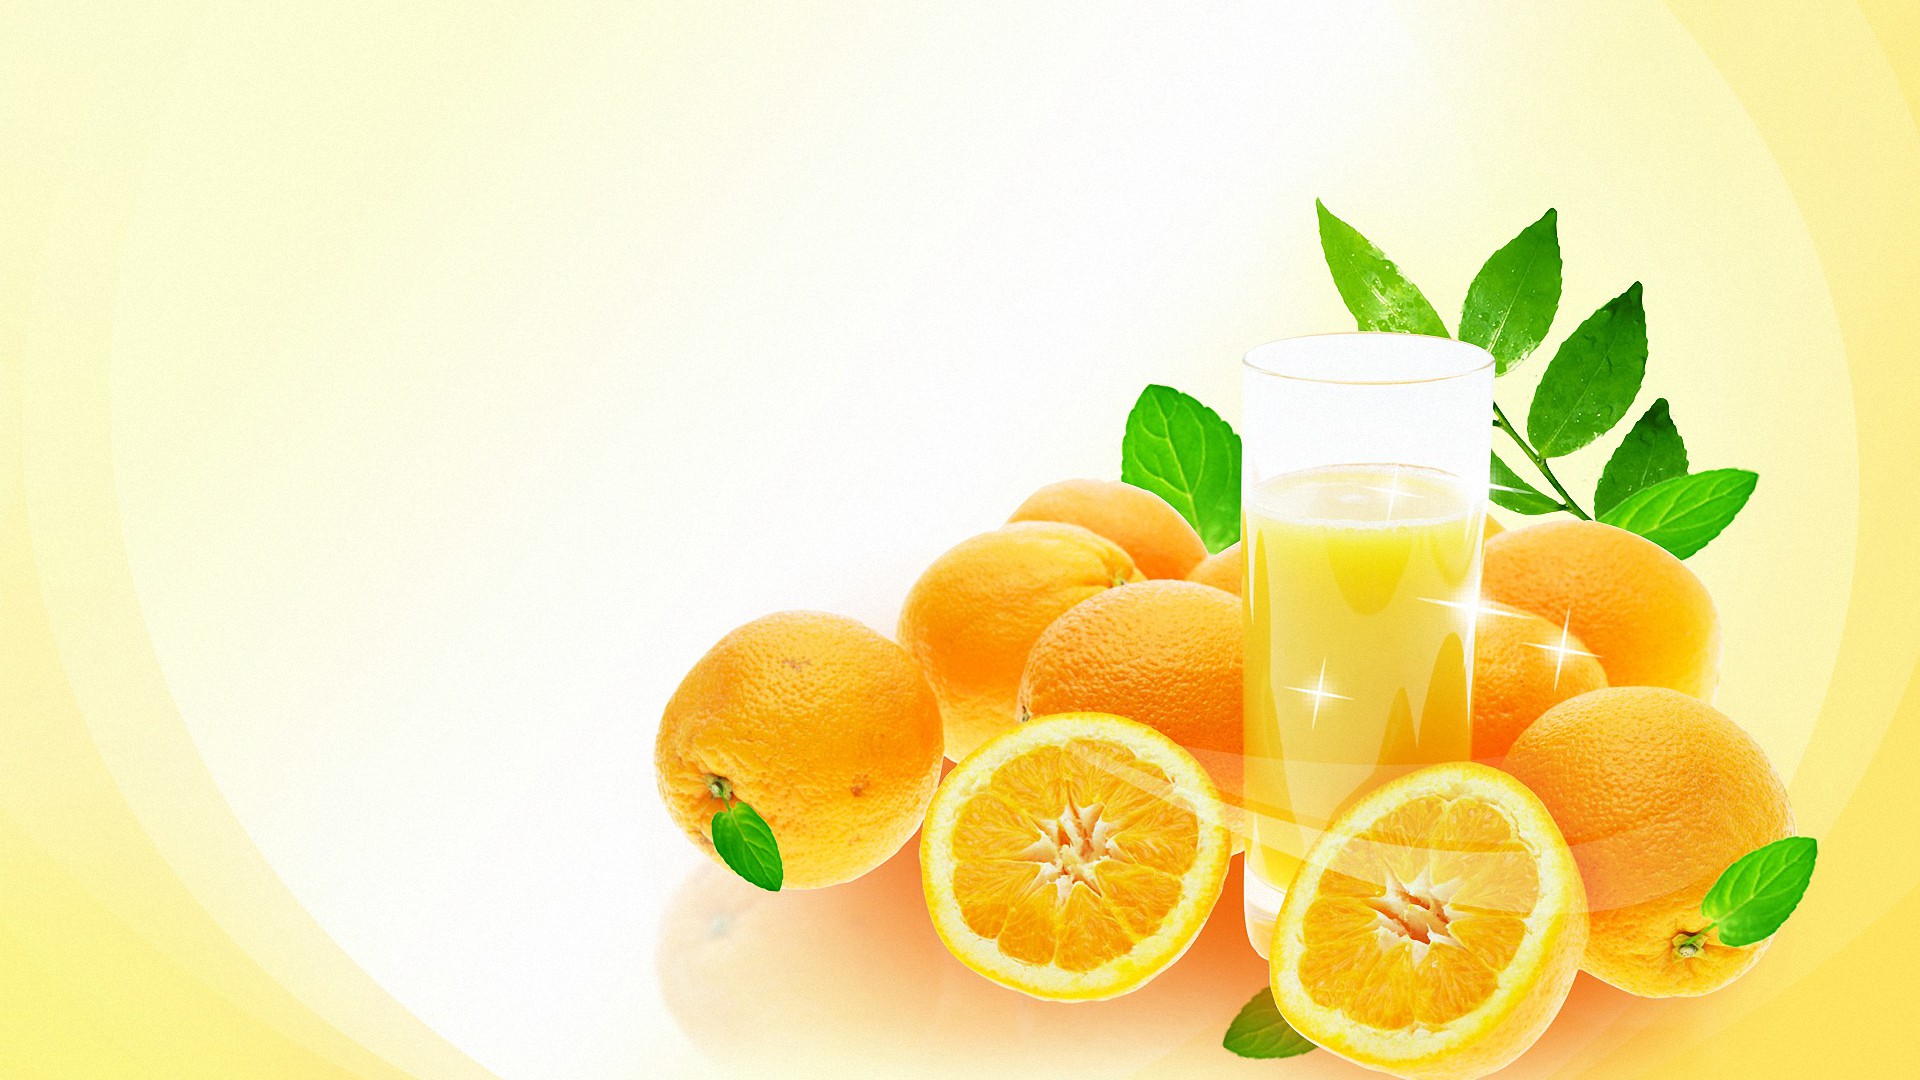 lemon wallpaper hd,lemon lime,citric acid,citrus,sweet lemon,key lime